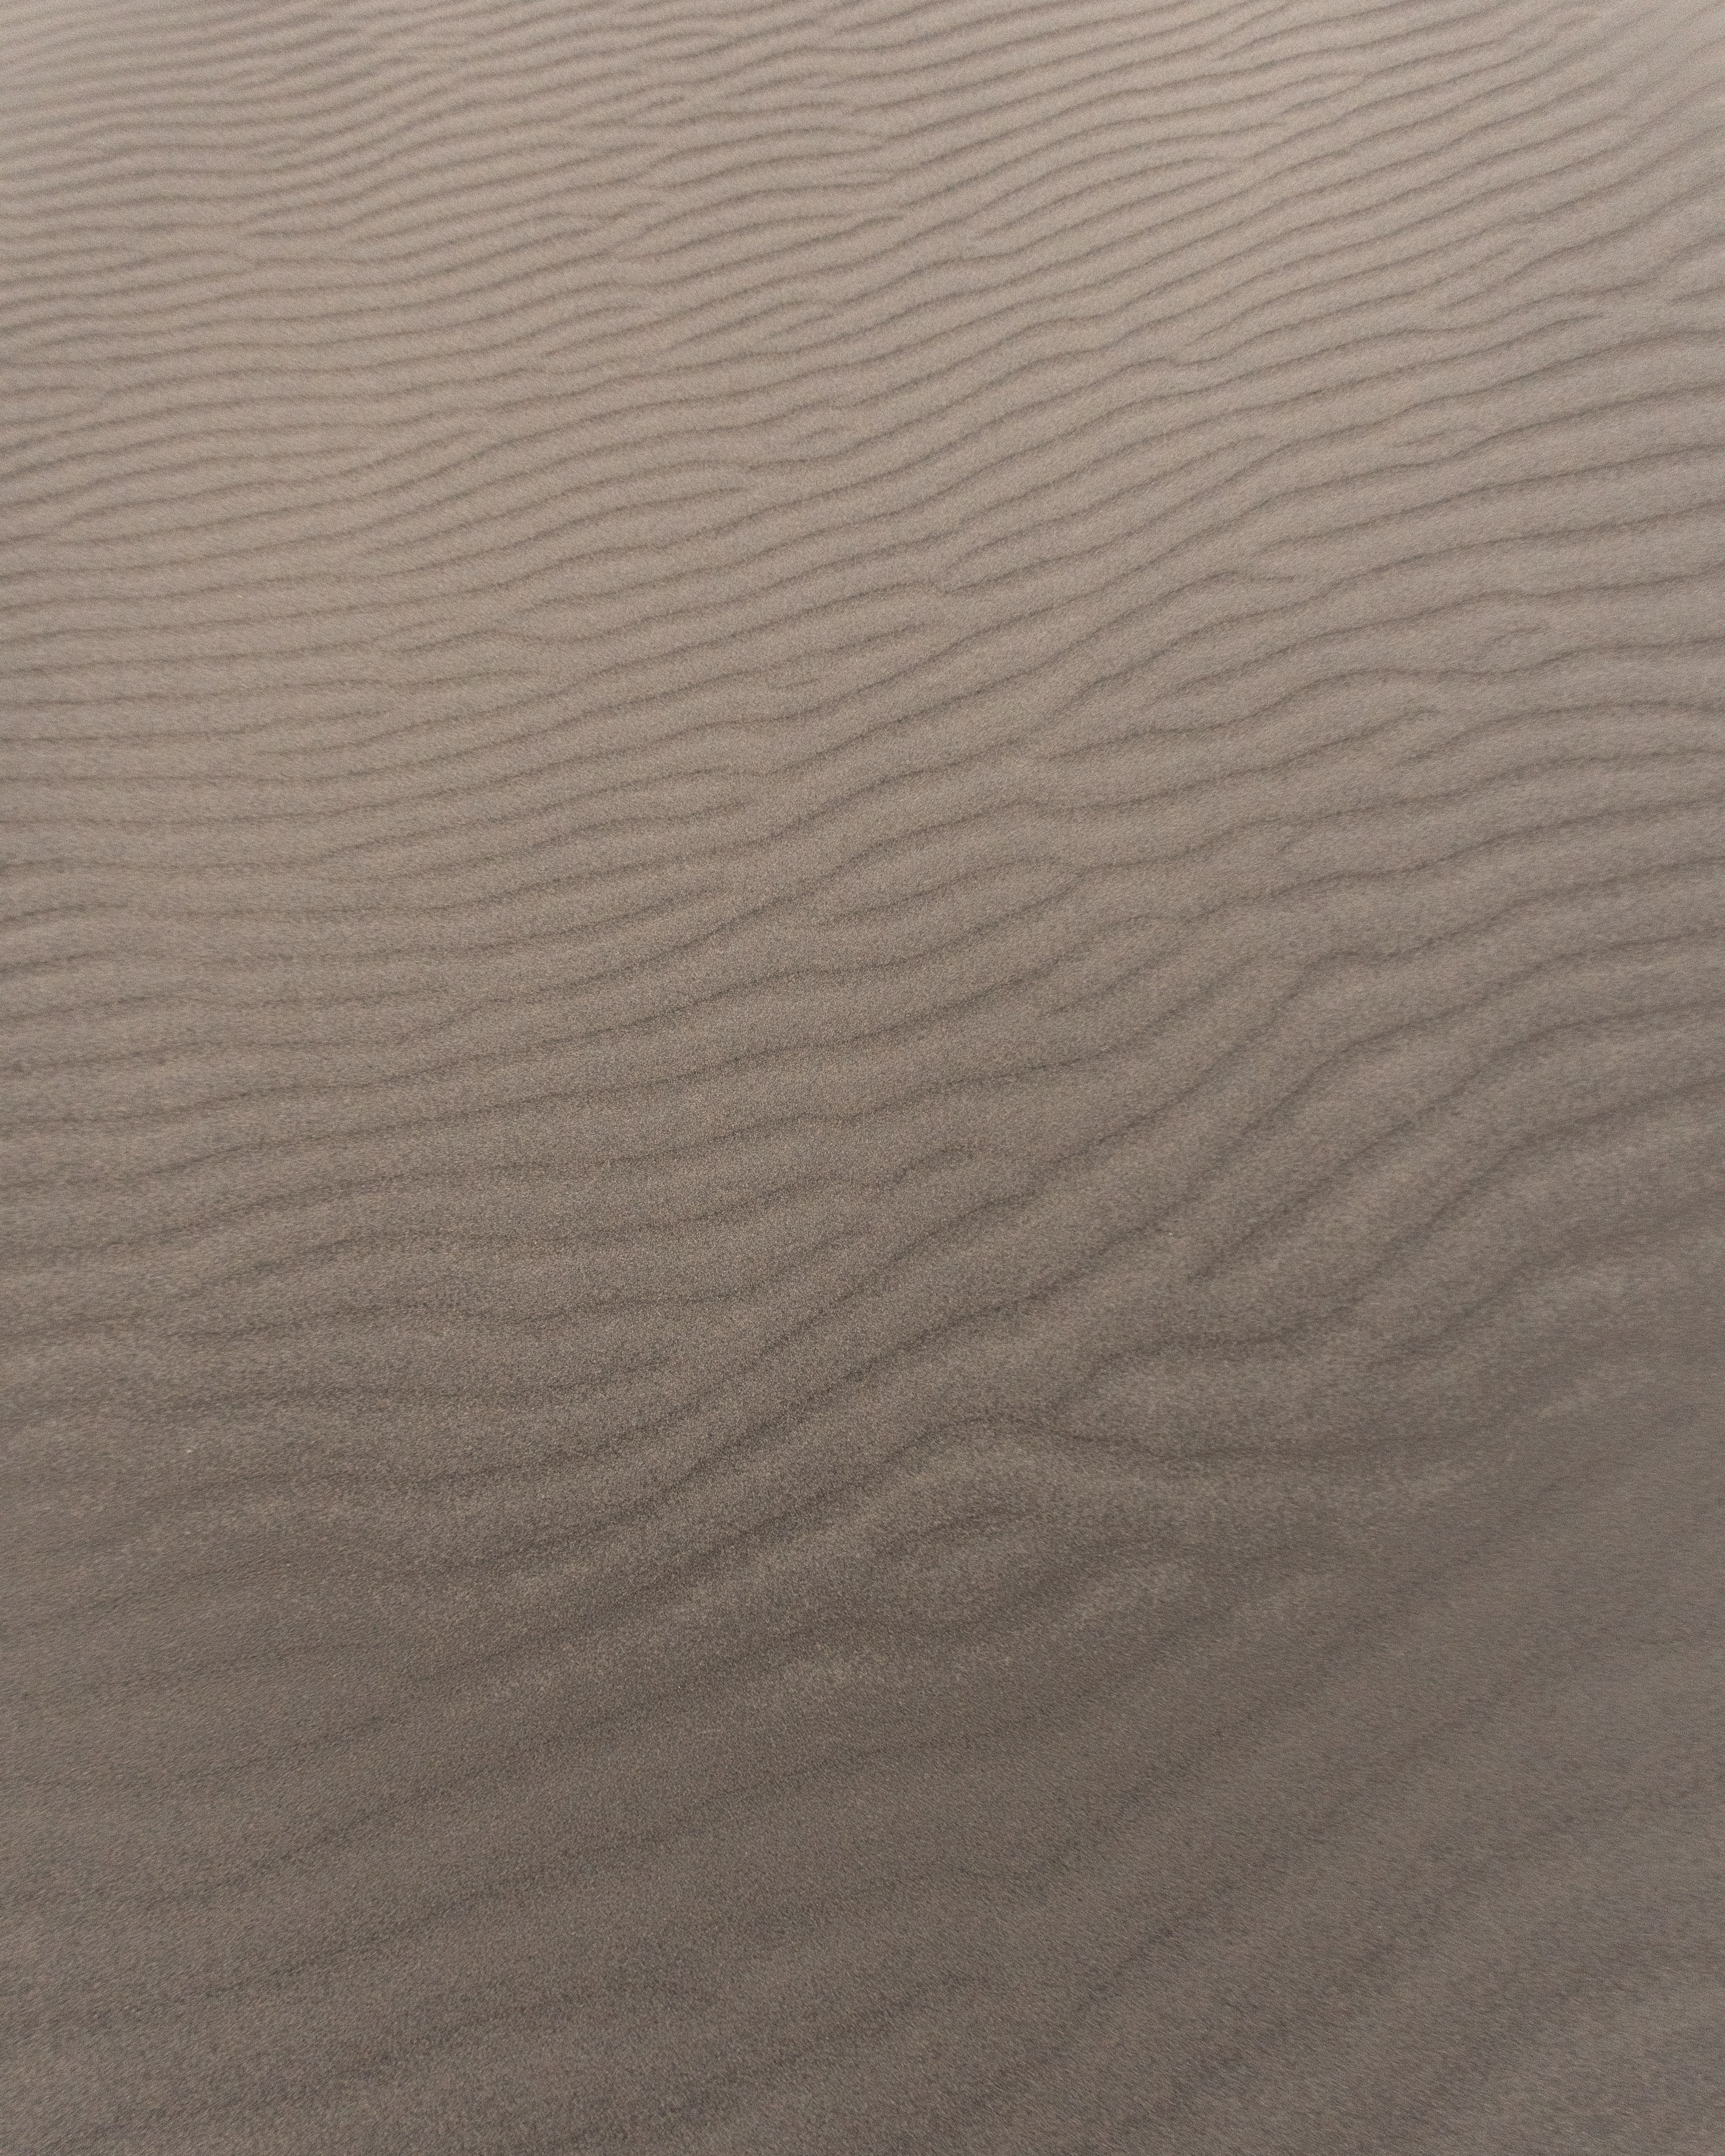 Wallpaper Full HD waves, sand, desert, texture, textures, stripes, streaks